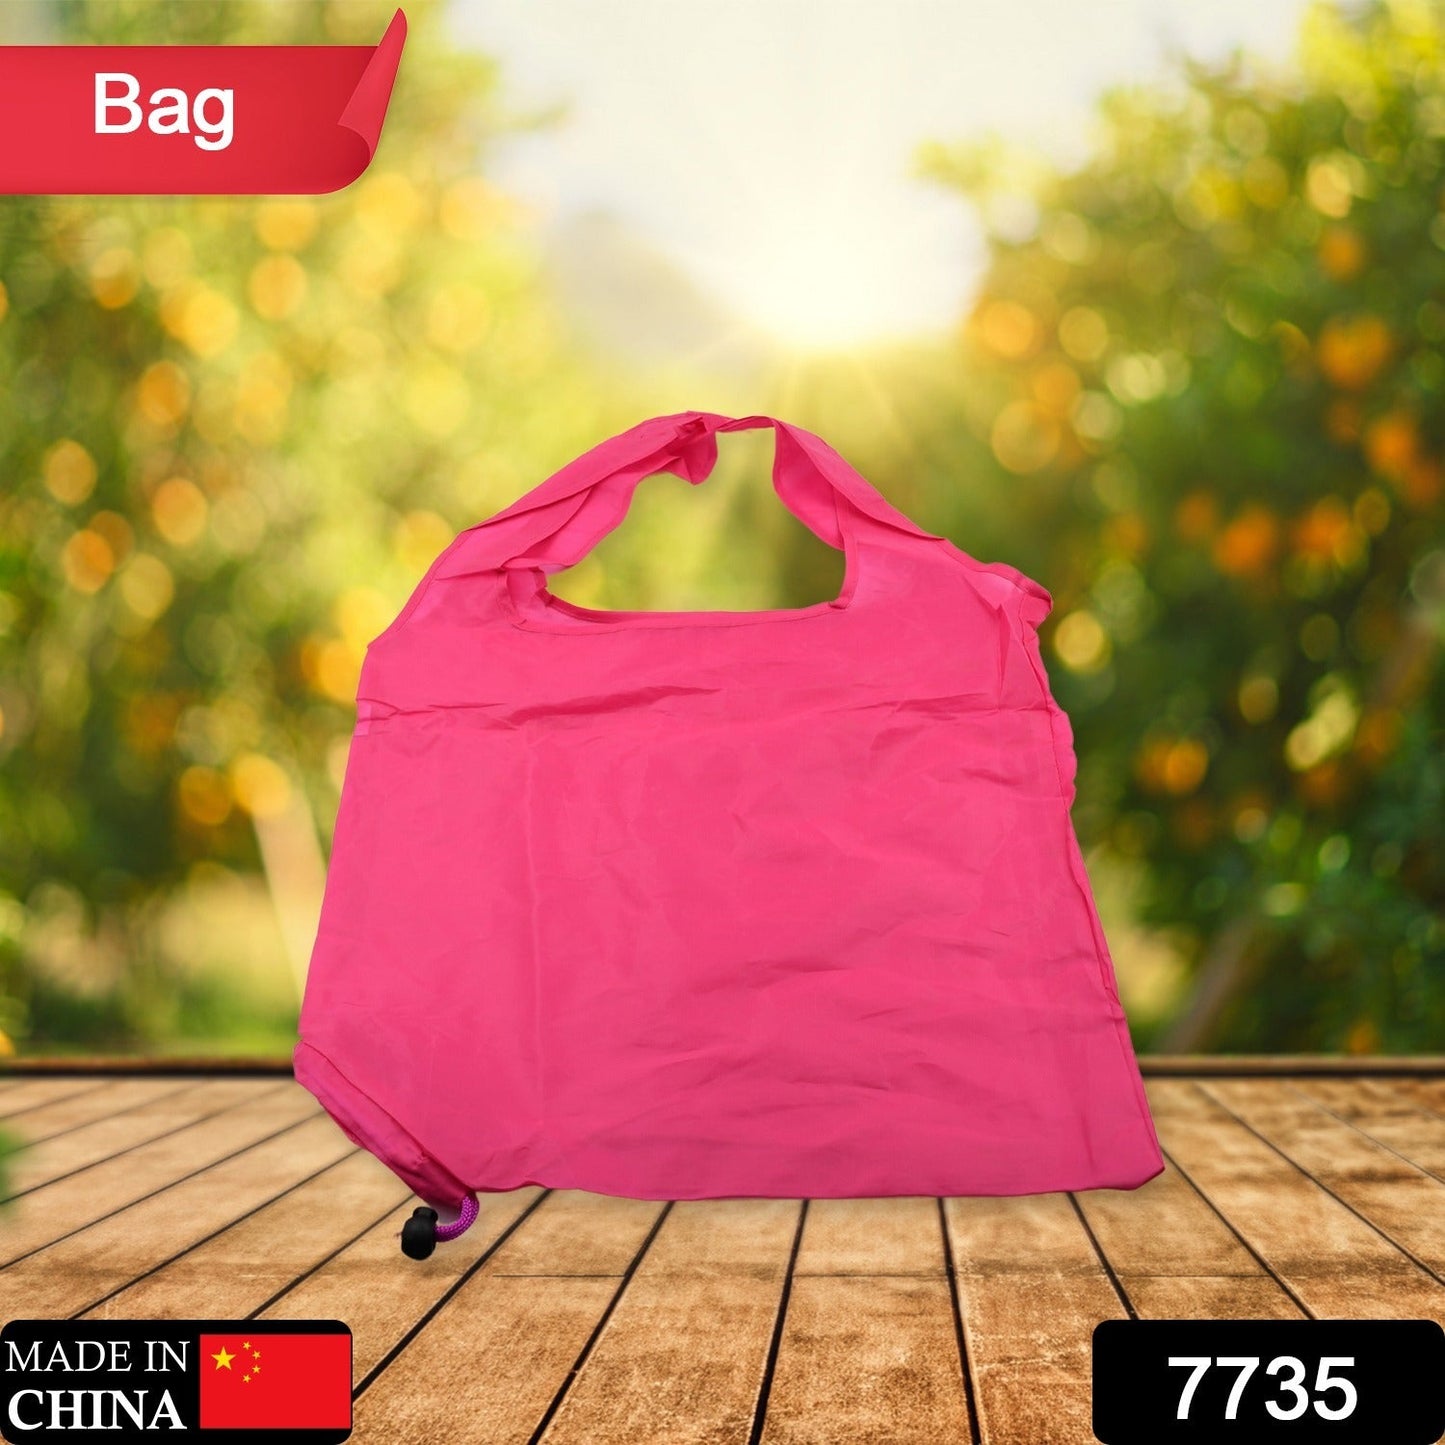 Reusable Grocery Bags - Reusable Bags With Handles - Washable Reusable Shopping Bags Foldable